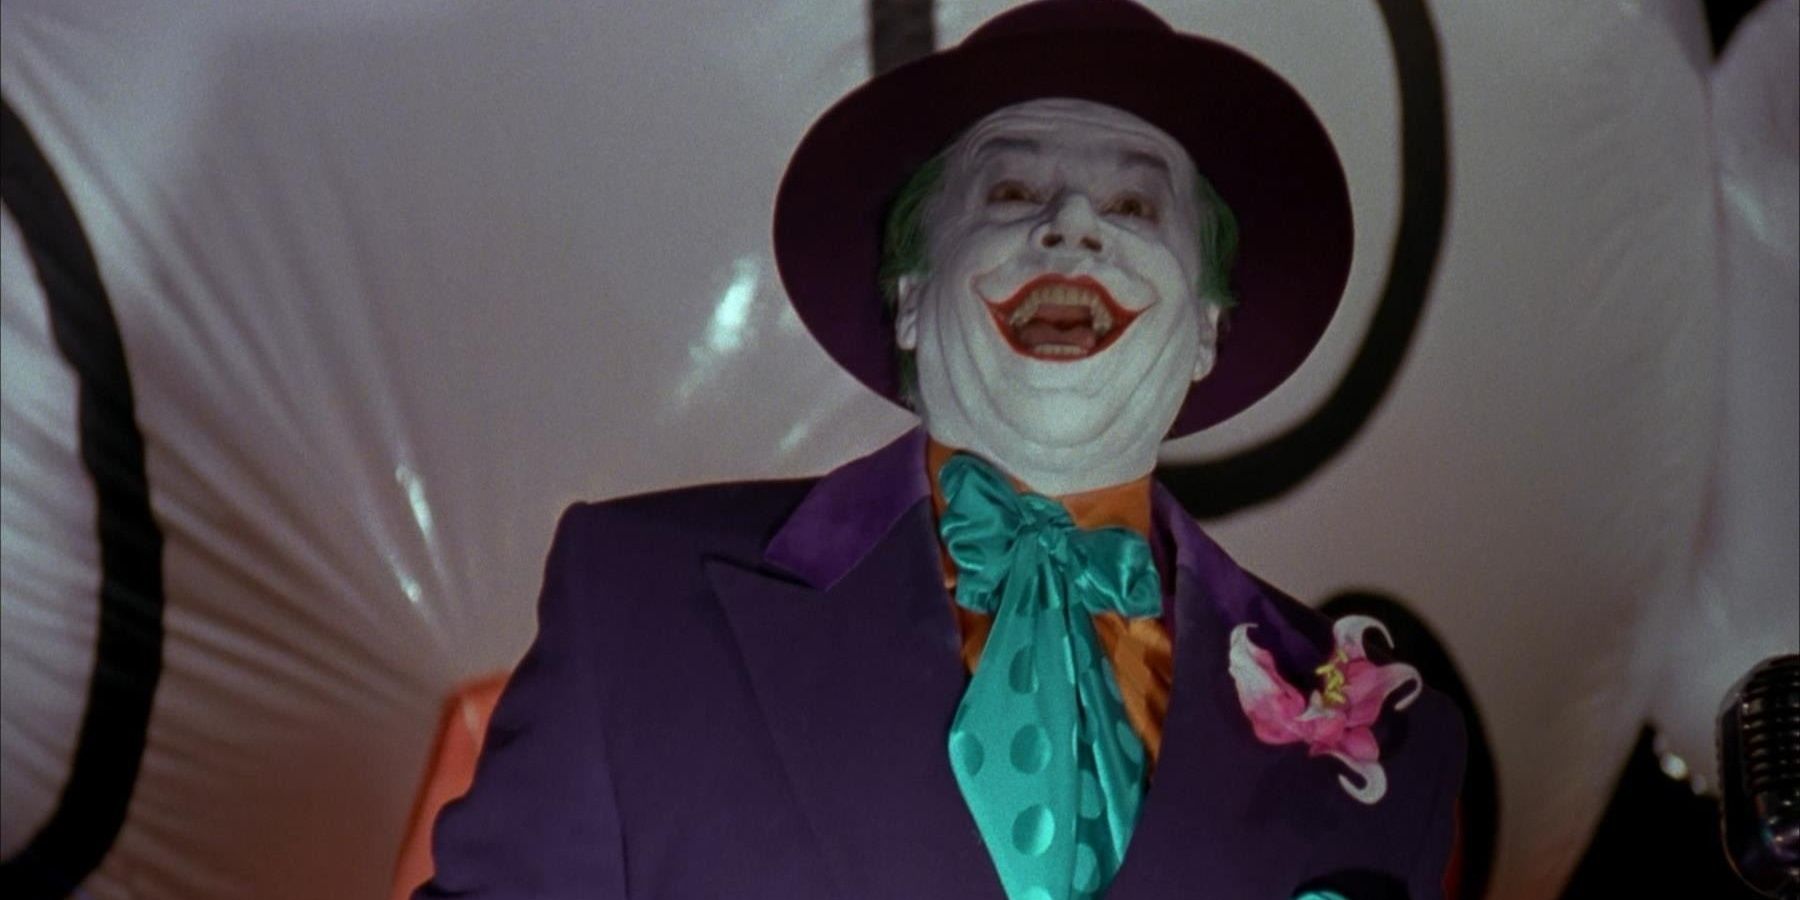 Jack Nicholson's Joker on float in front of his balloon